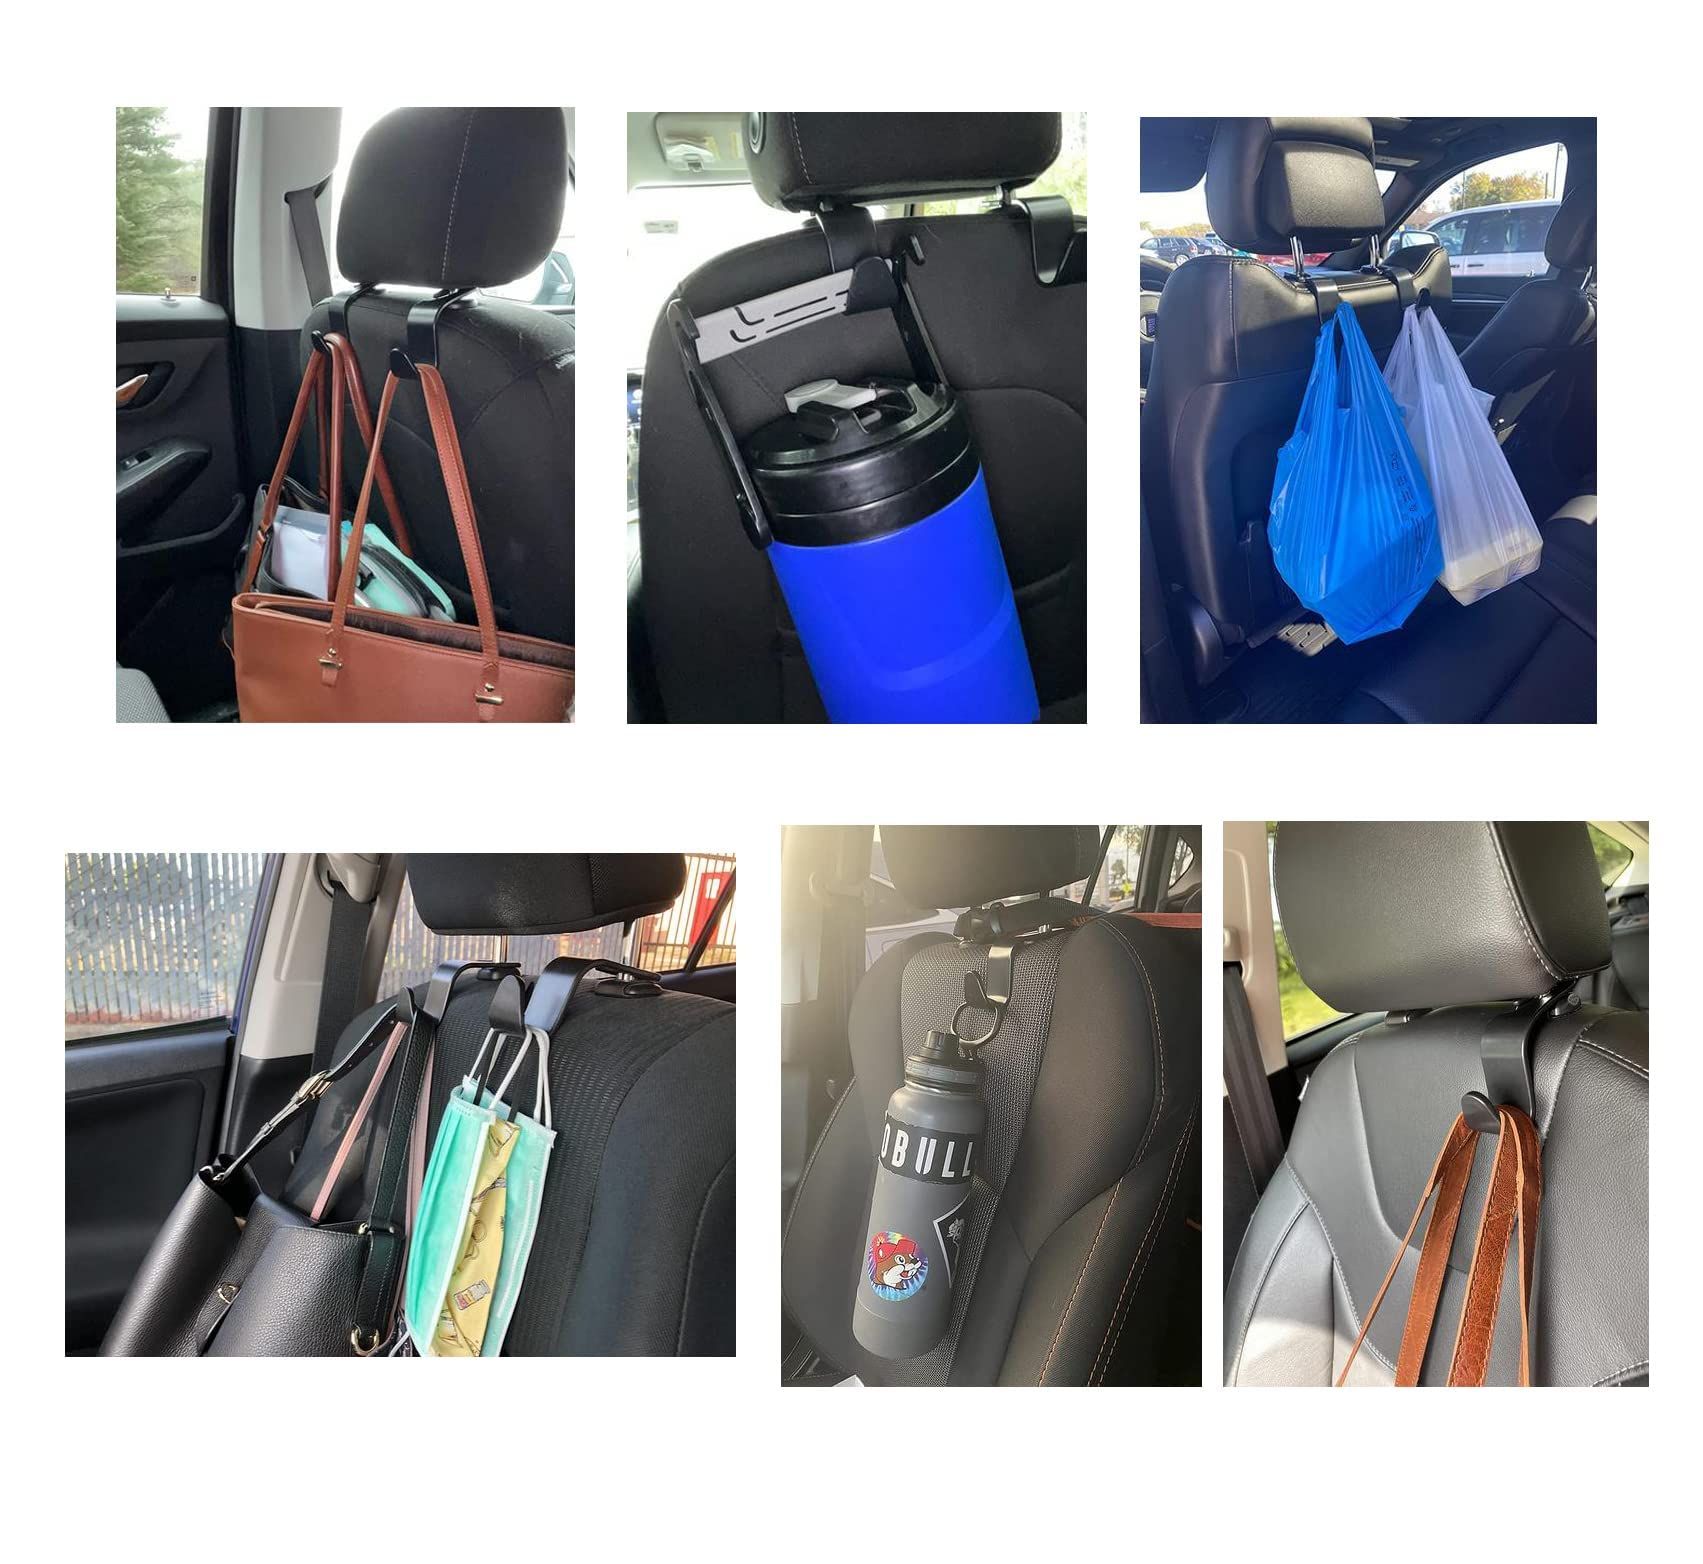 Amooca Car Seat Headrest Hook 4 Pack Hanger Storage Organizer Universal for Handbag Purse Coat fi... | Amazon (US)